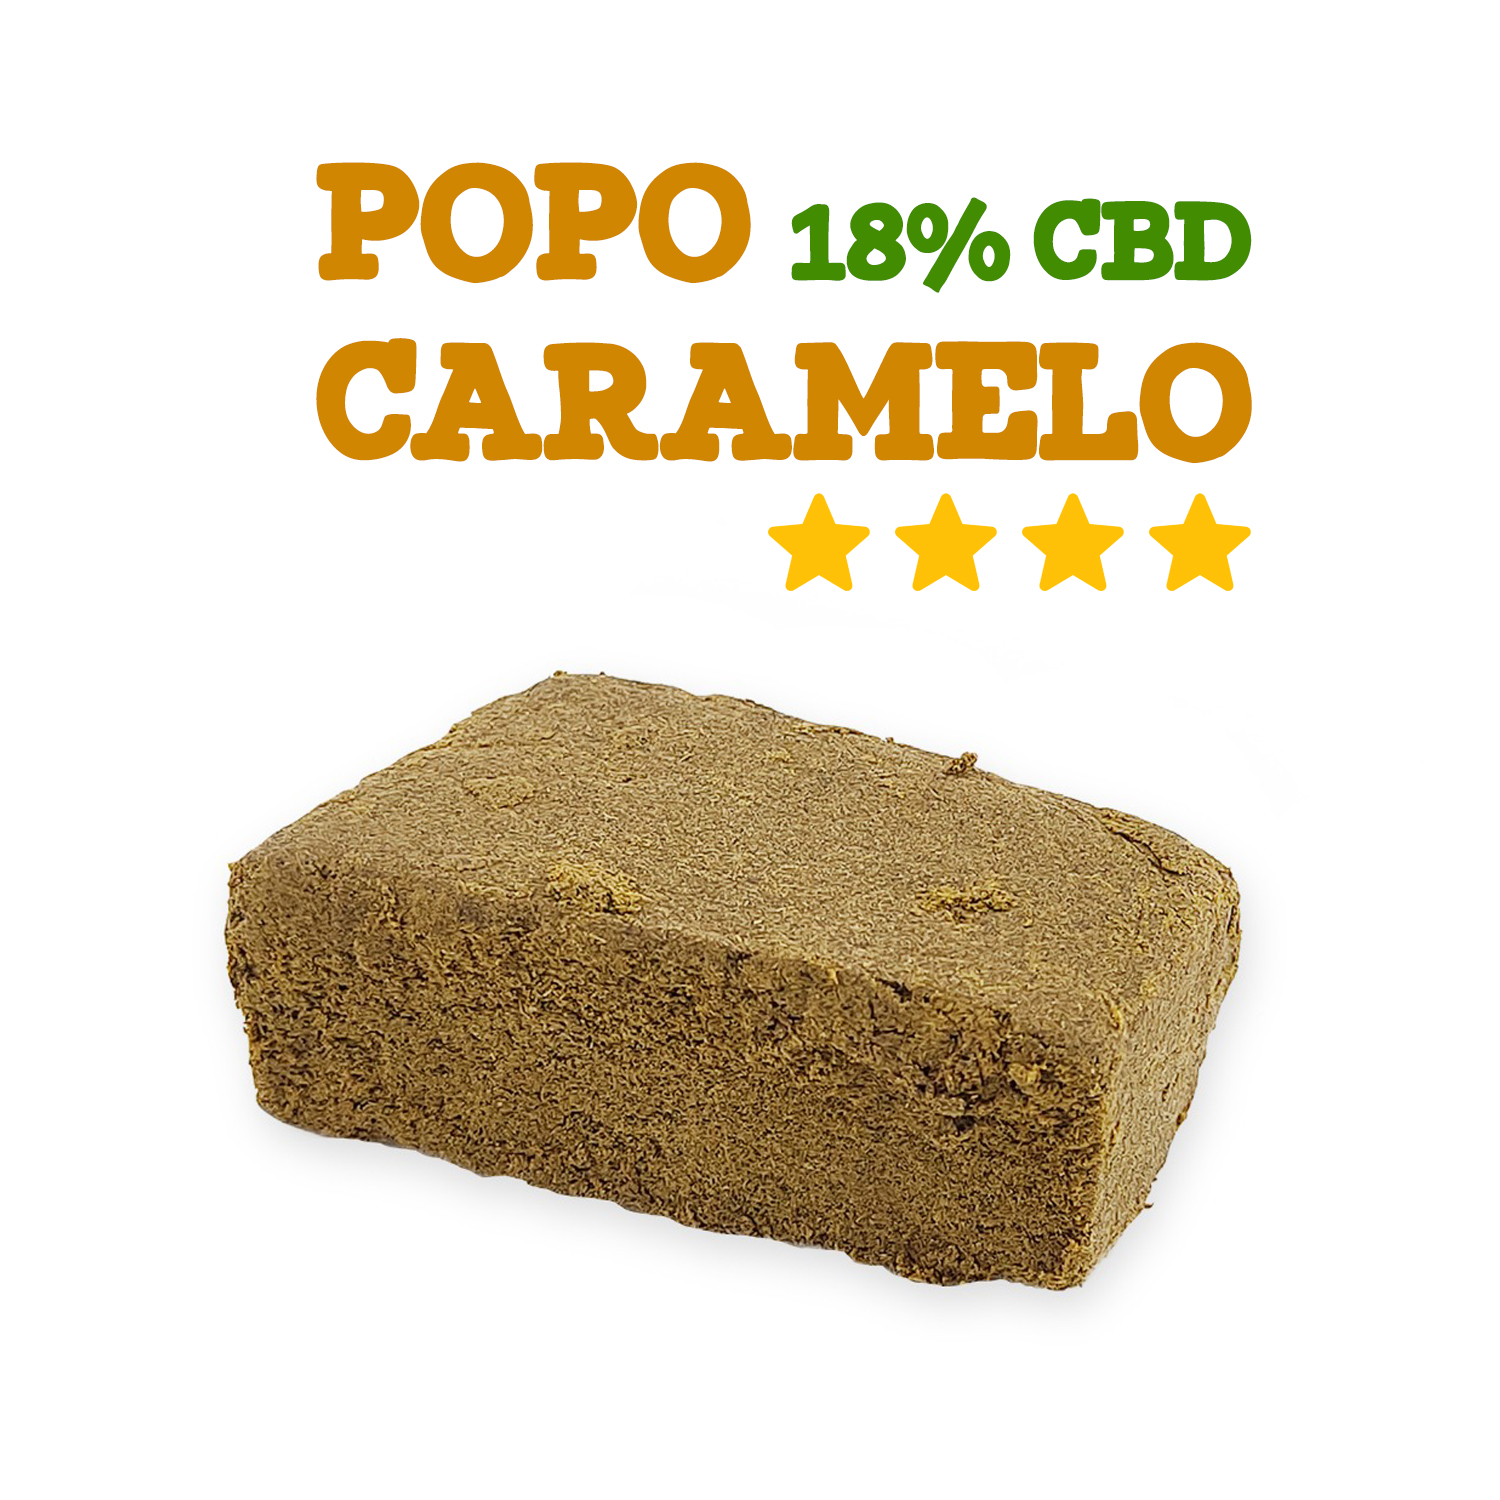 POPO CARAMELO 18% CBD